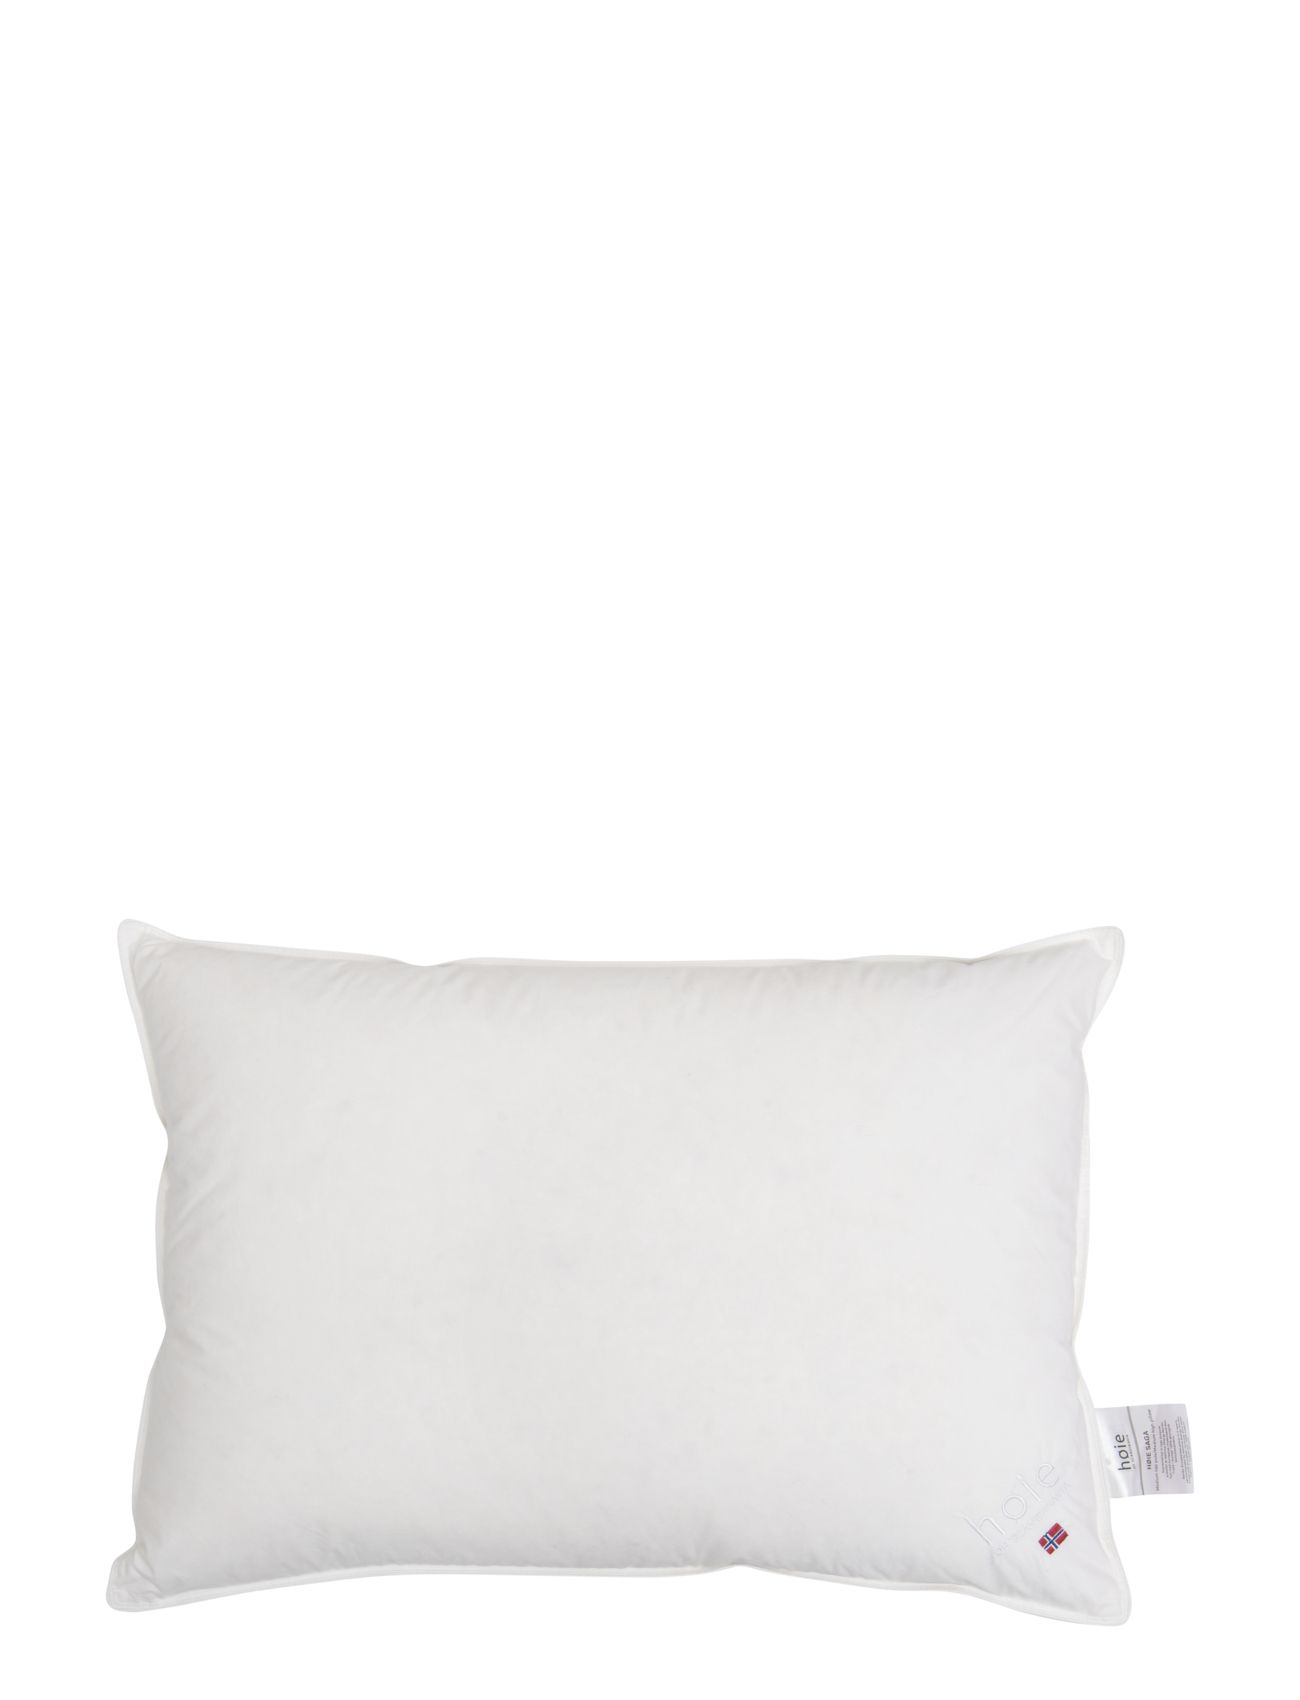 Saga Medium Dunkudde Home Textiles Bedtextiles Pillows White Høie Of Scandinavia